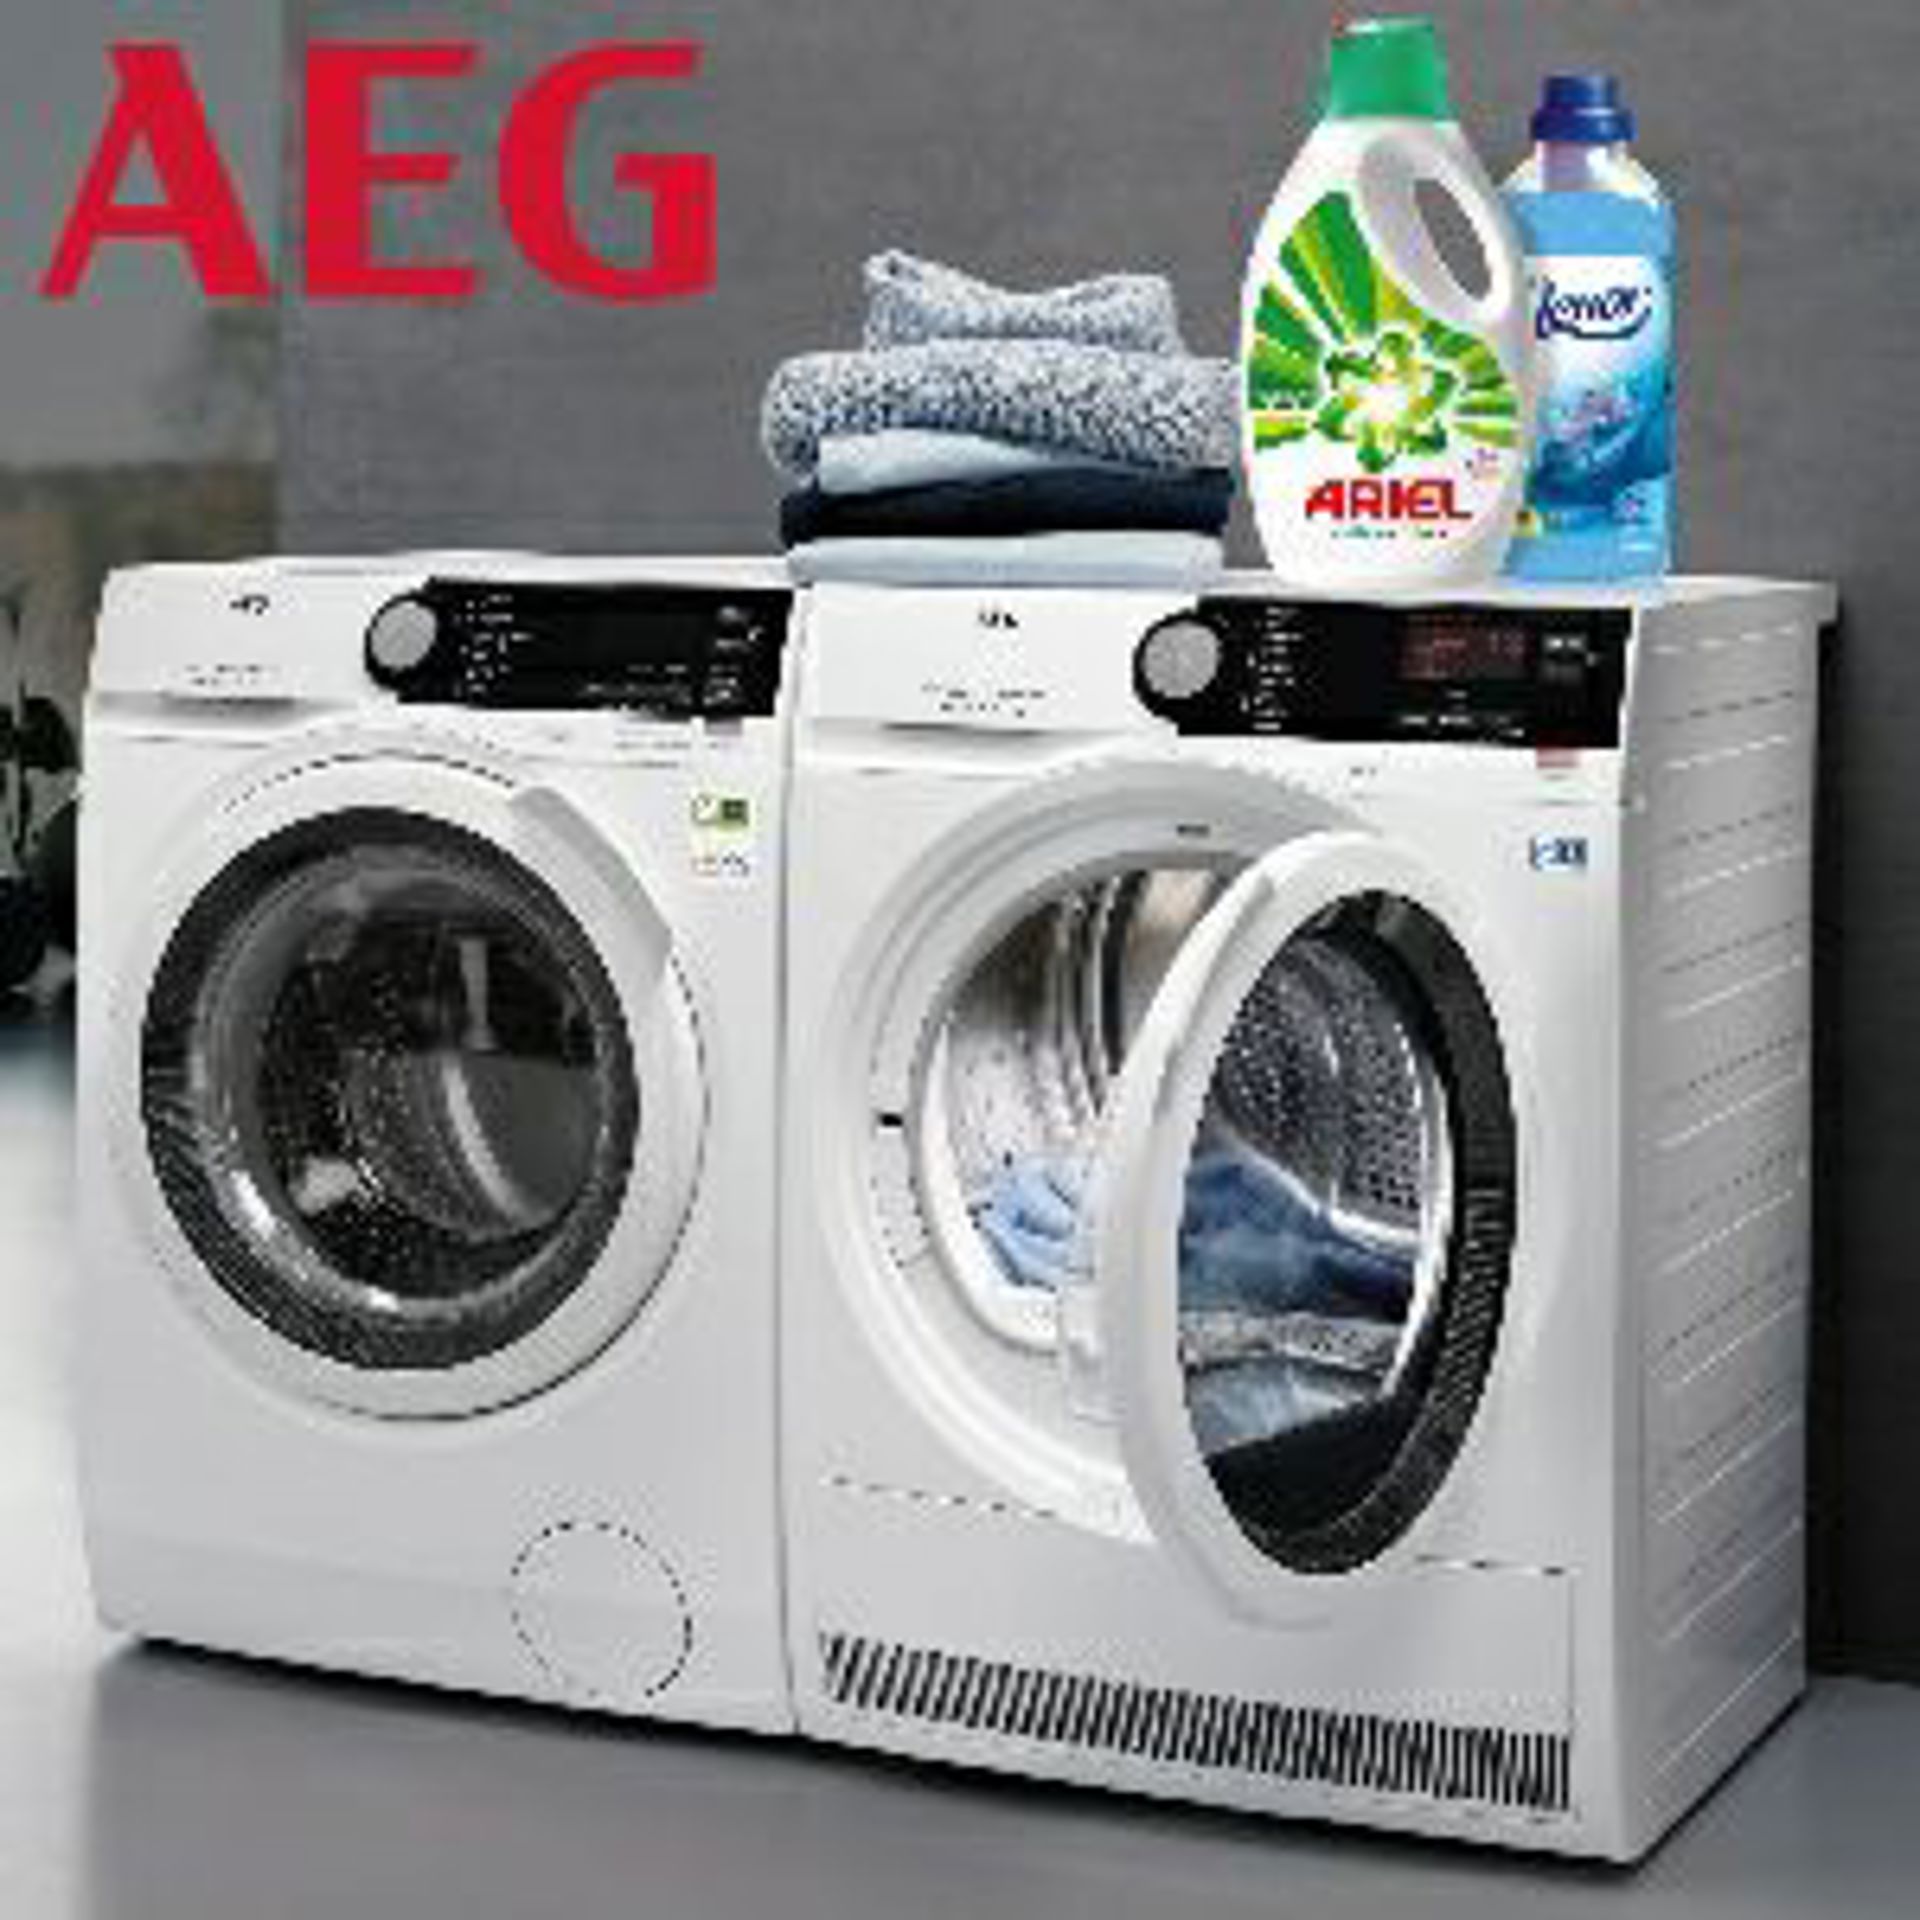 AEG vam daruje besplatna pranja